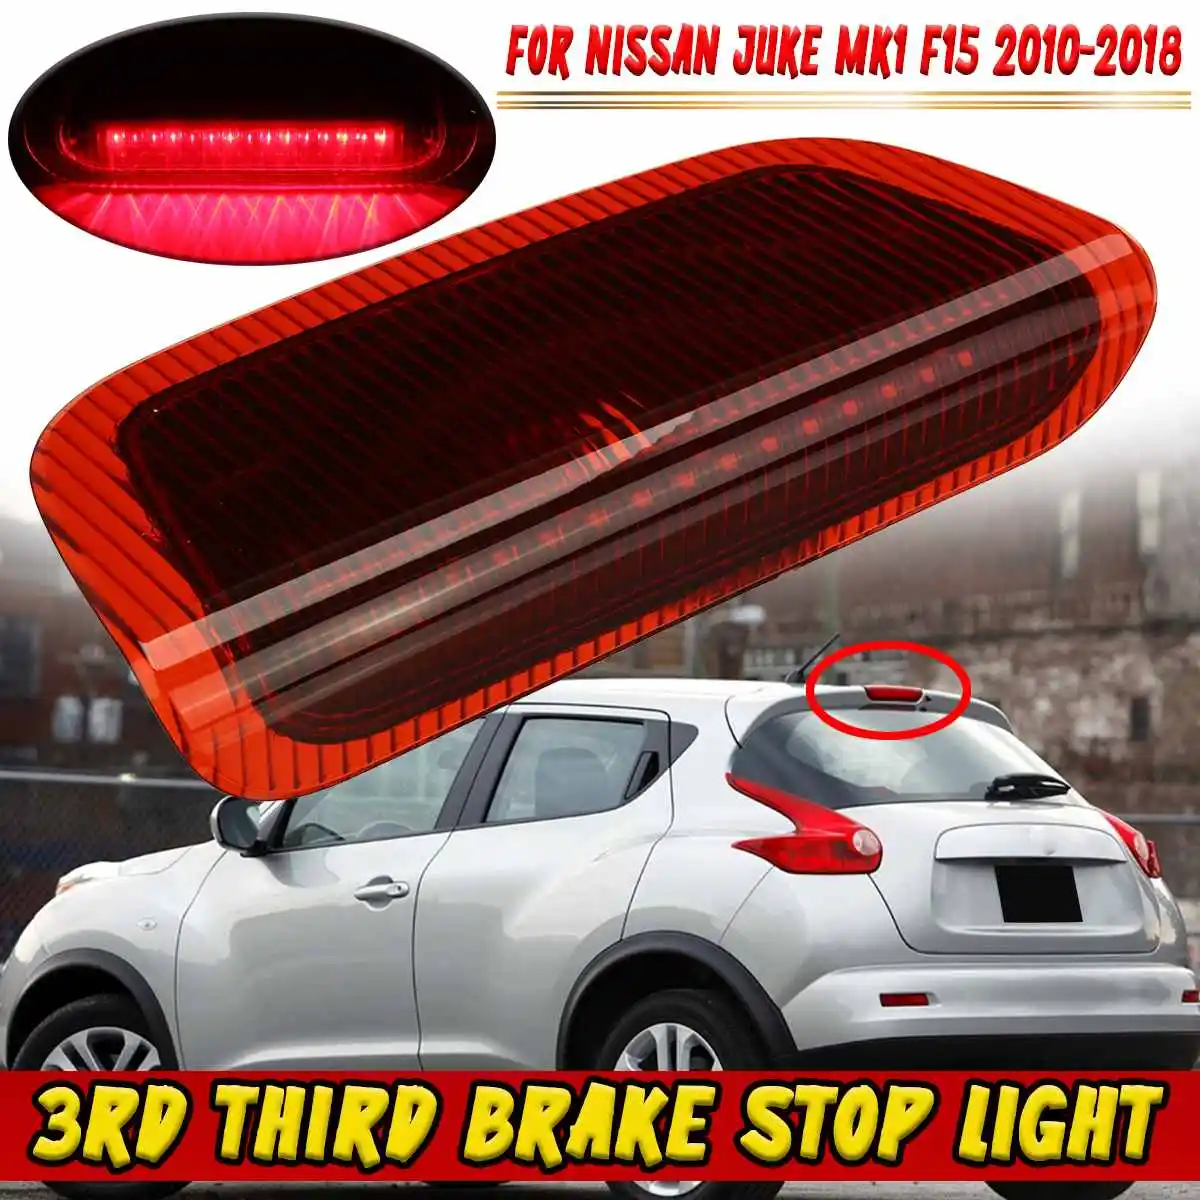 3RD Third Brake Light Tail light Rear High Mount Stop Warning Lamp For Nissan Juke MK1 F15 2010-2018 Additional Brake Light 1